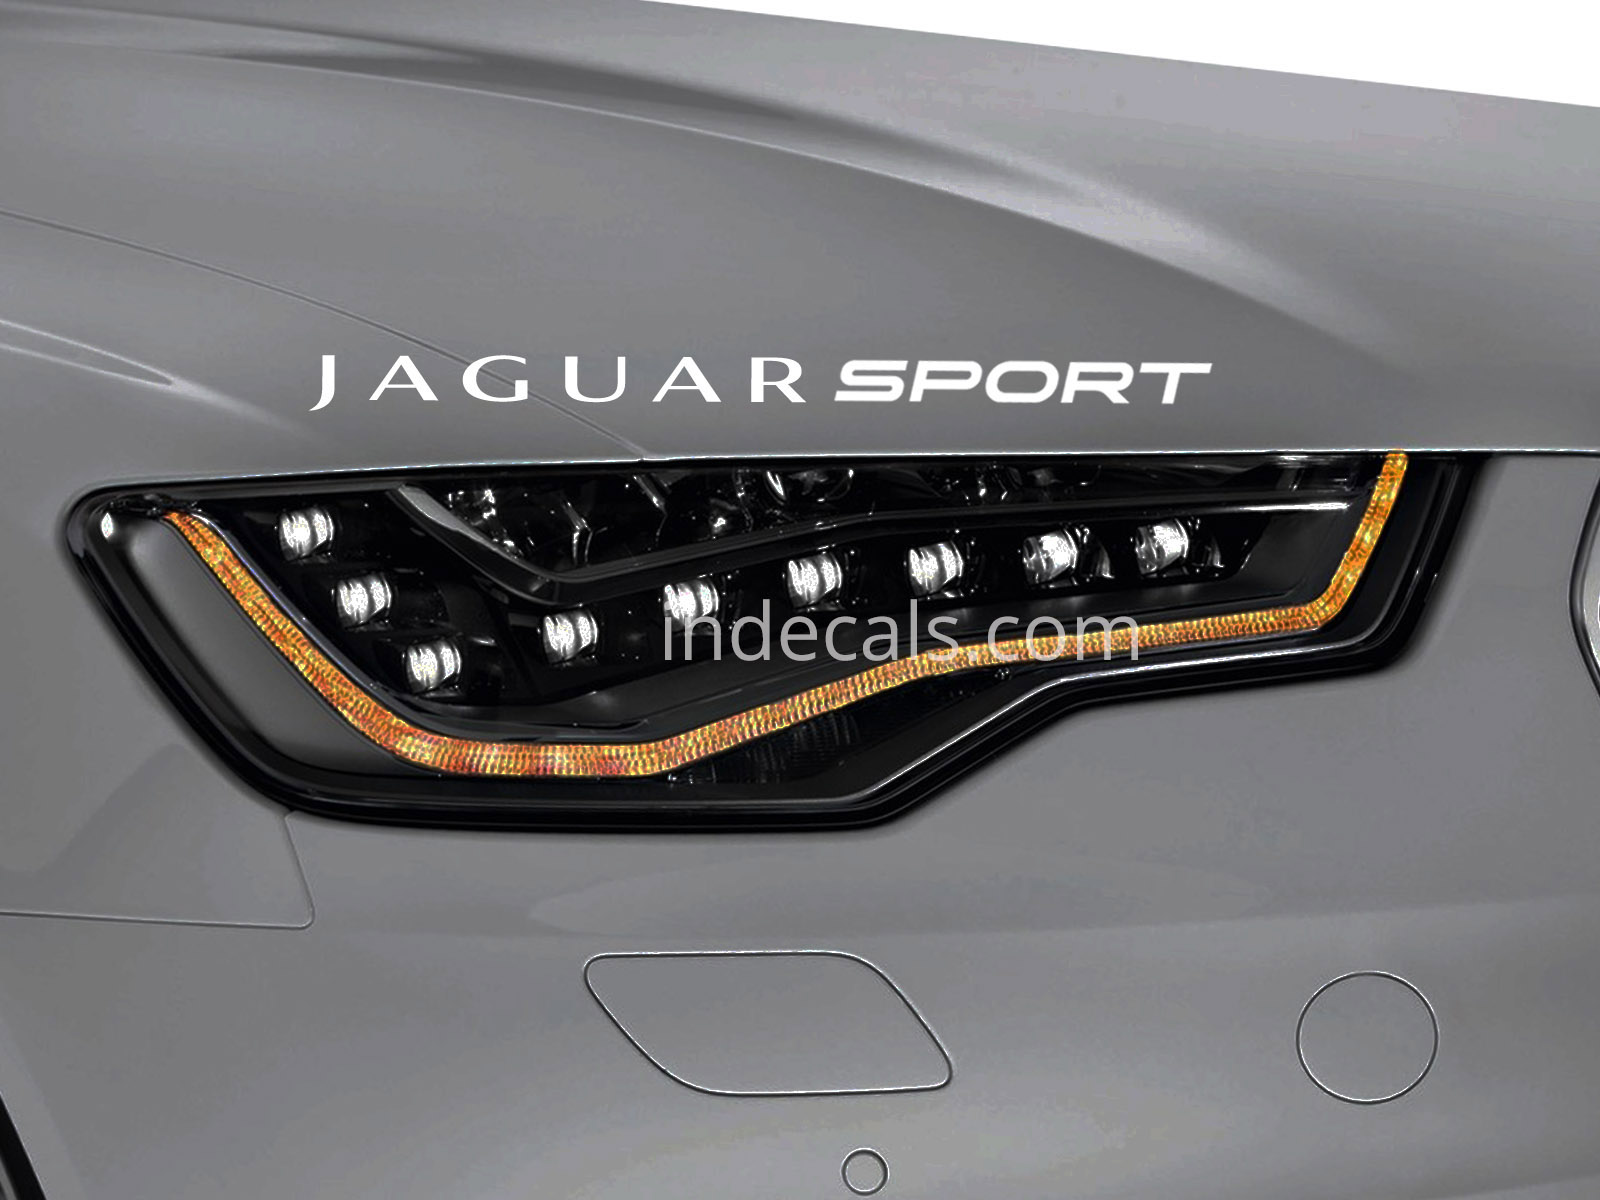 1 x Jaguar Sport Sticker for Eyebrow - White